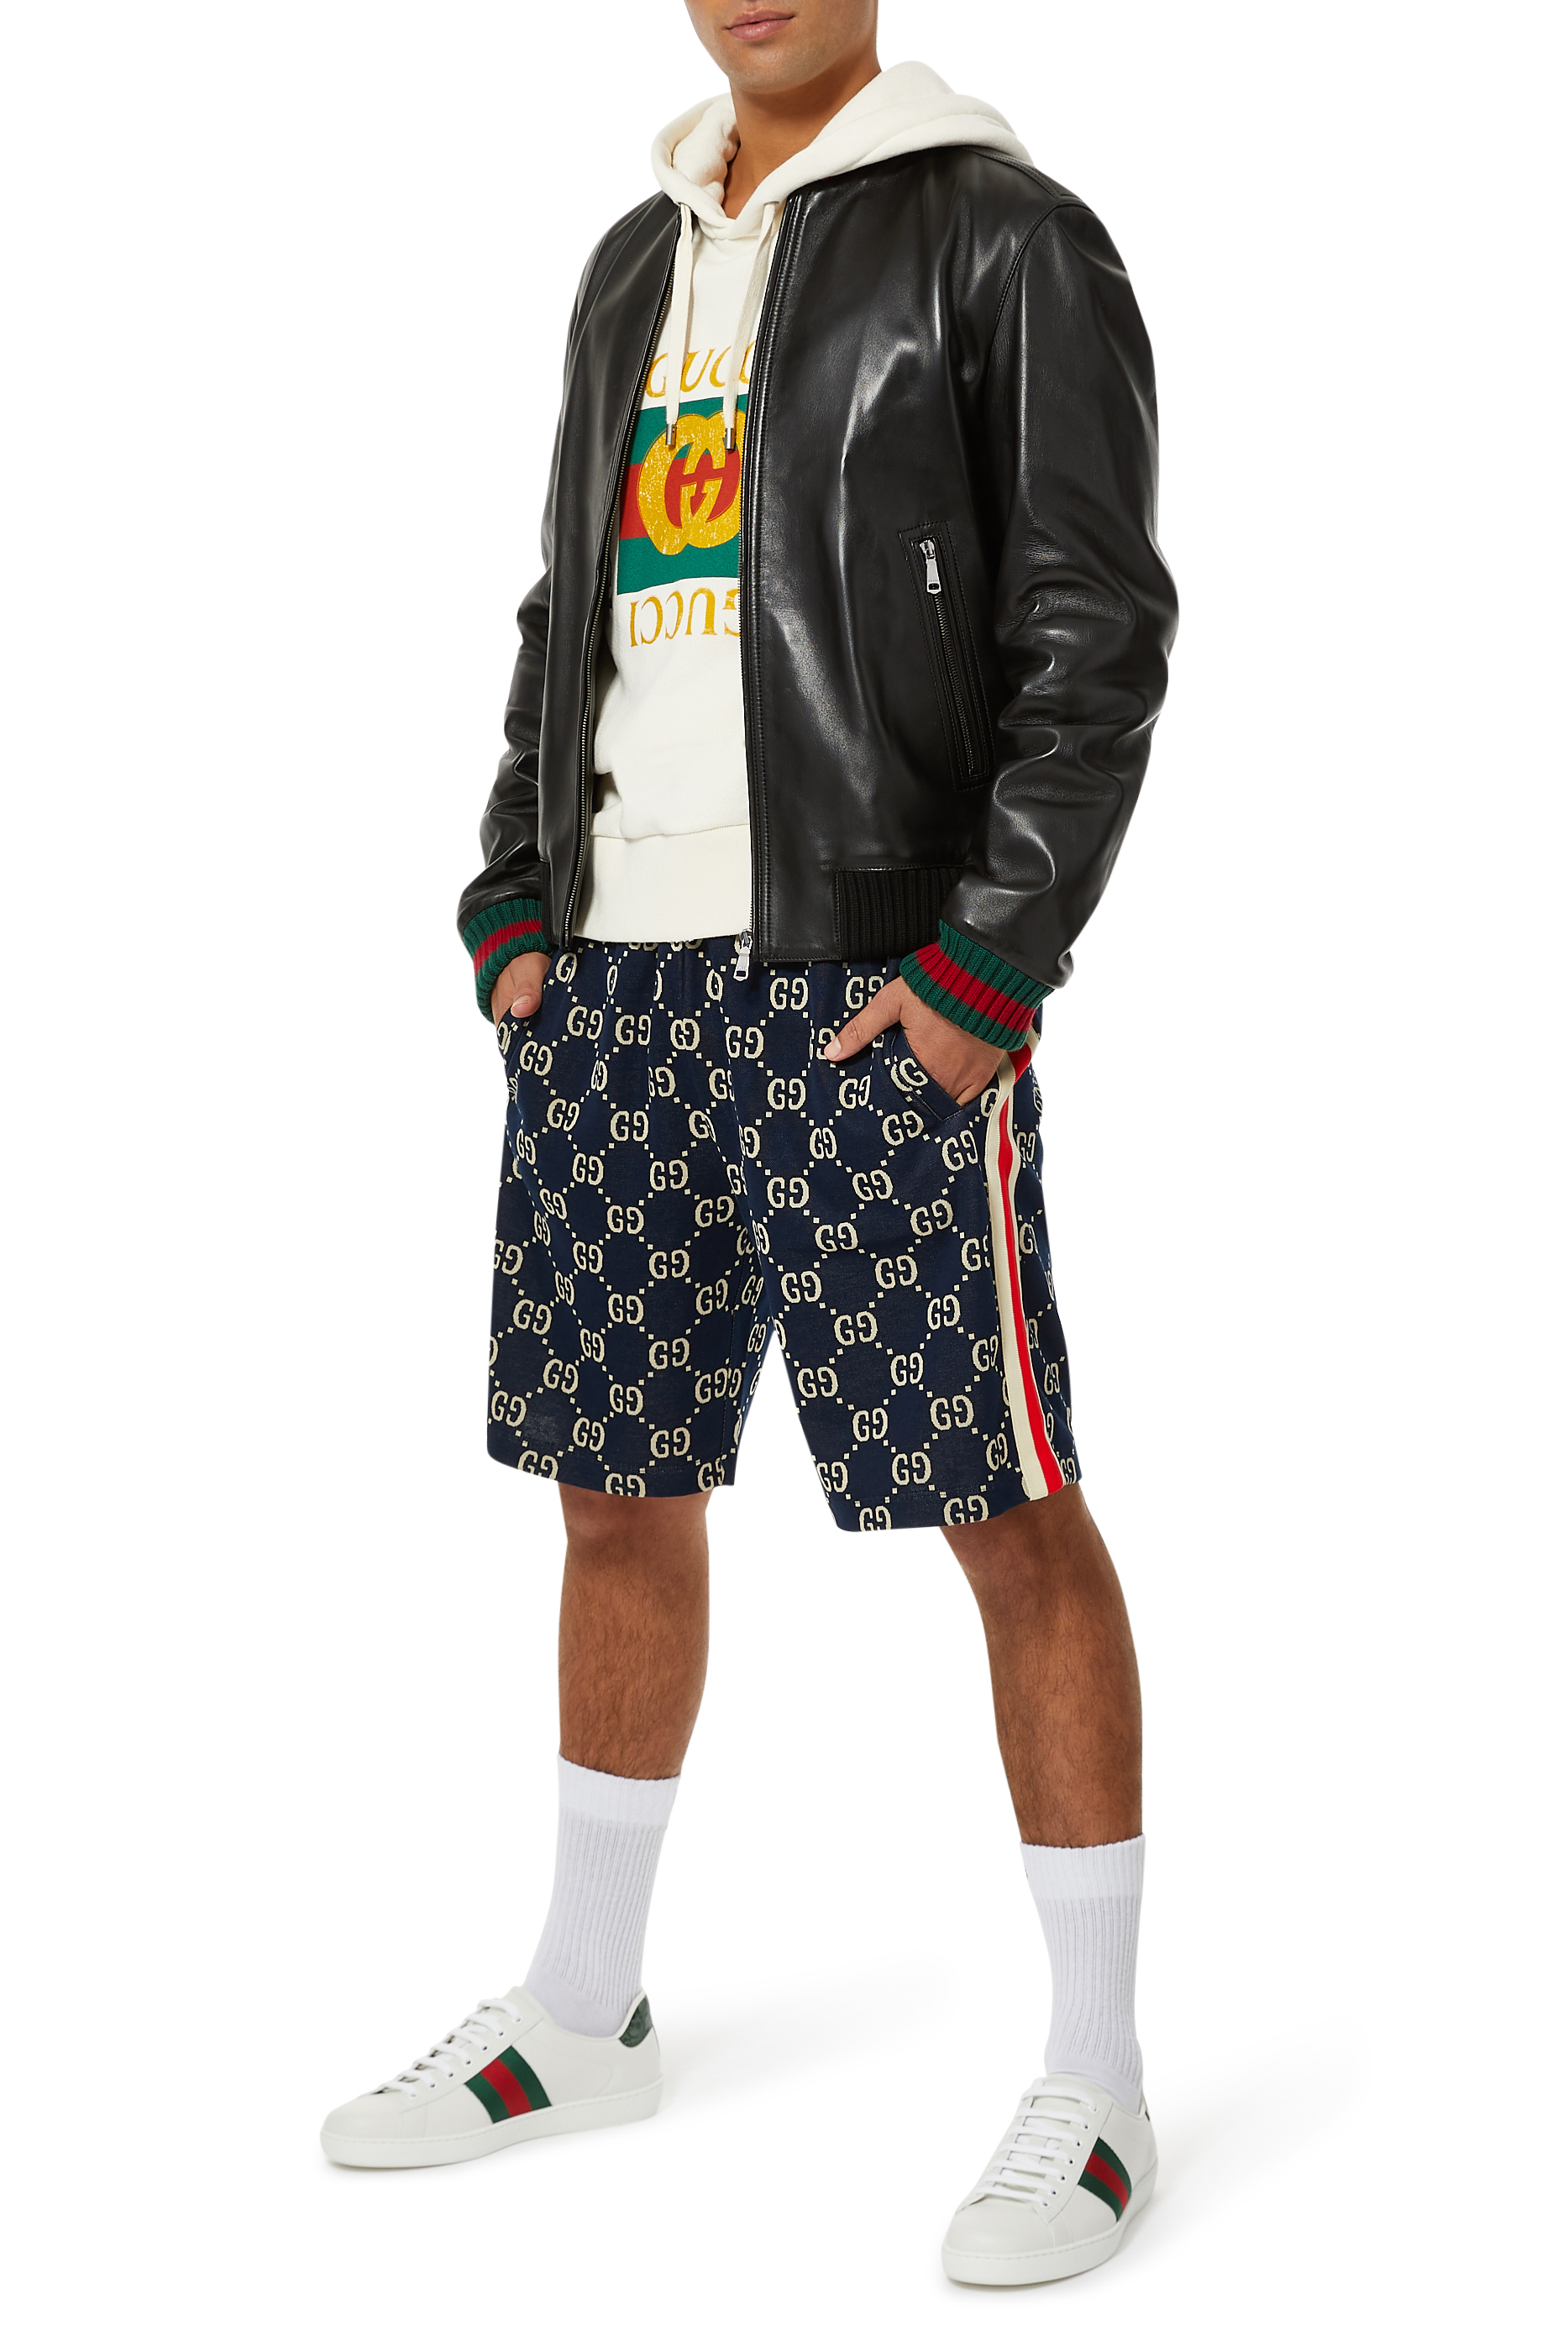 GG jacquard shorts in black - Gucci